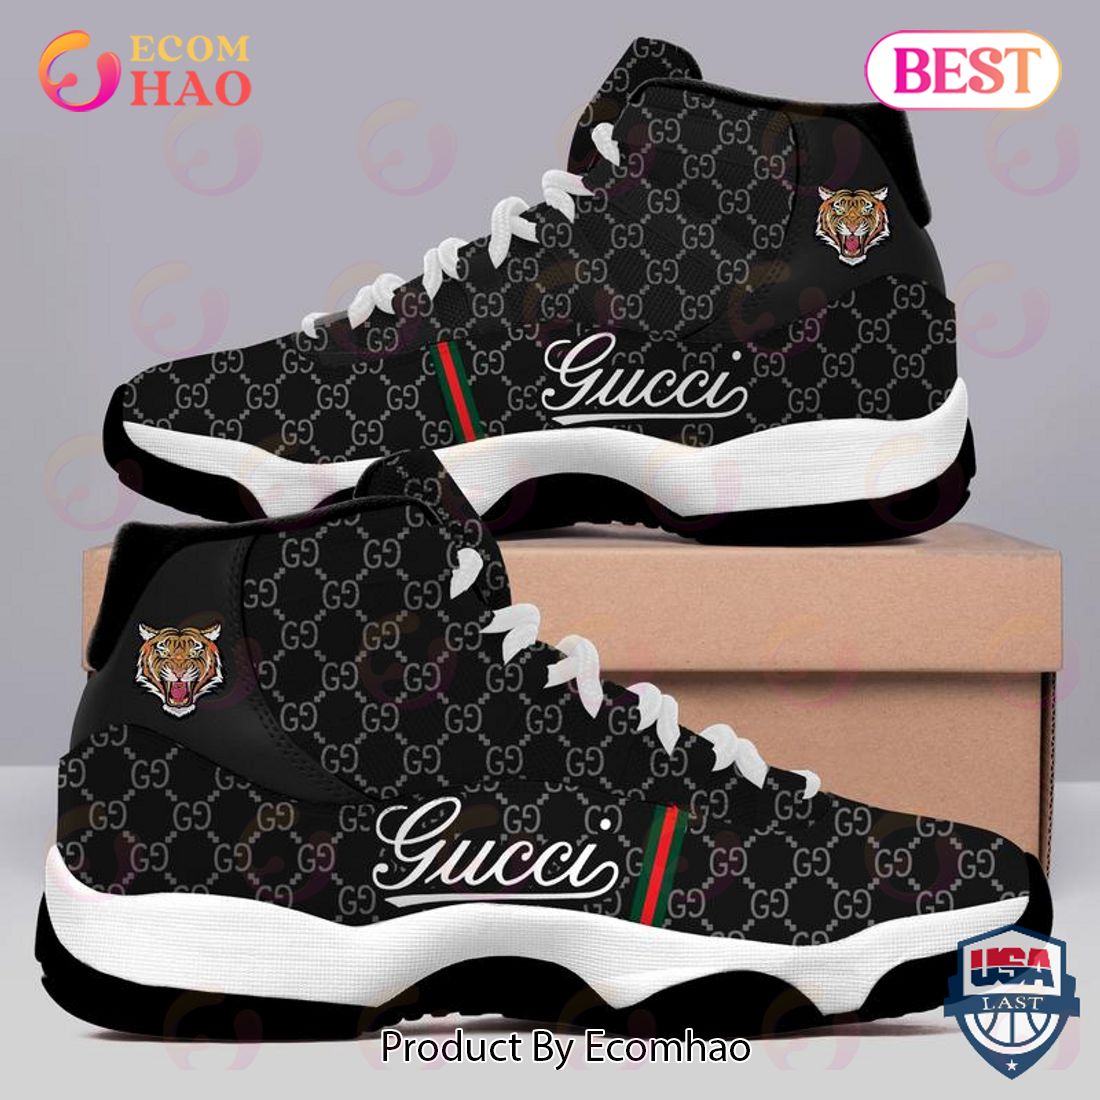 Gucci Air Jordan 11 Shoes pod design official ? h19